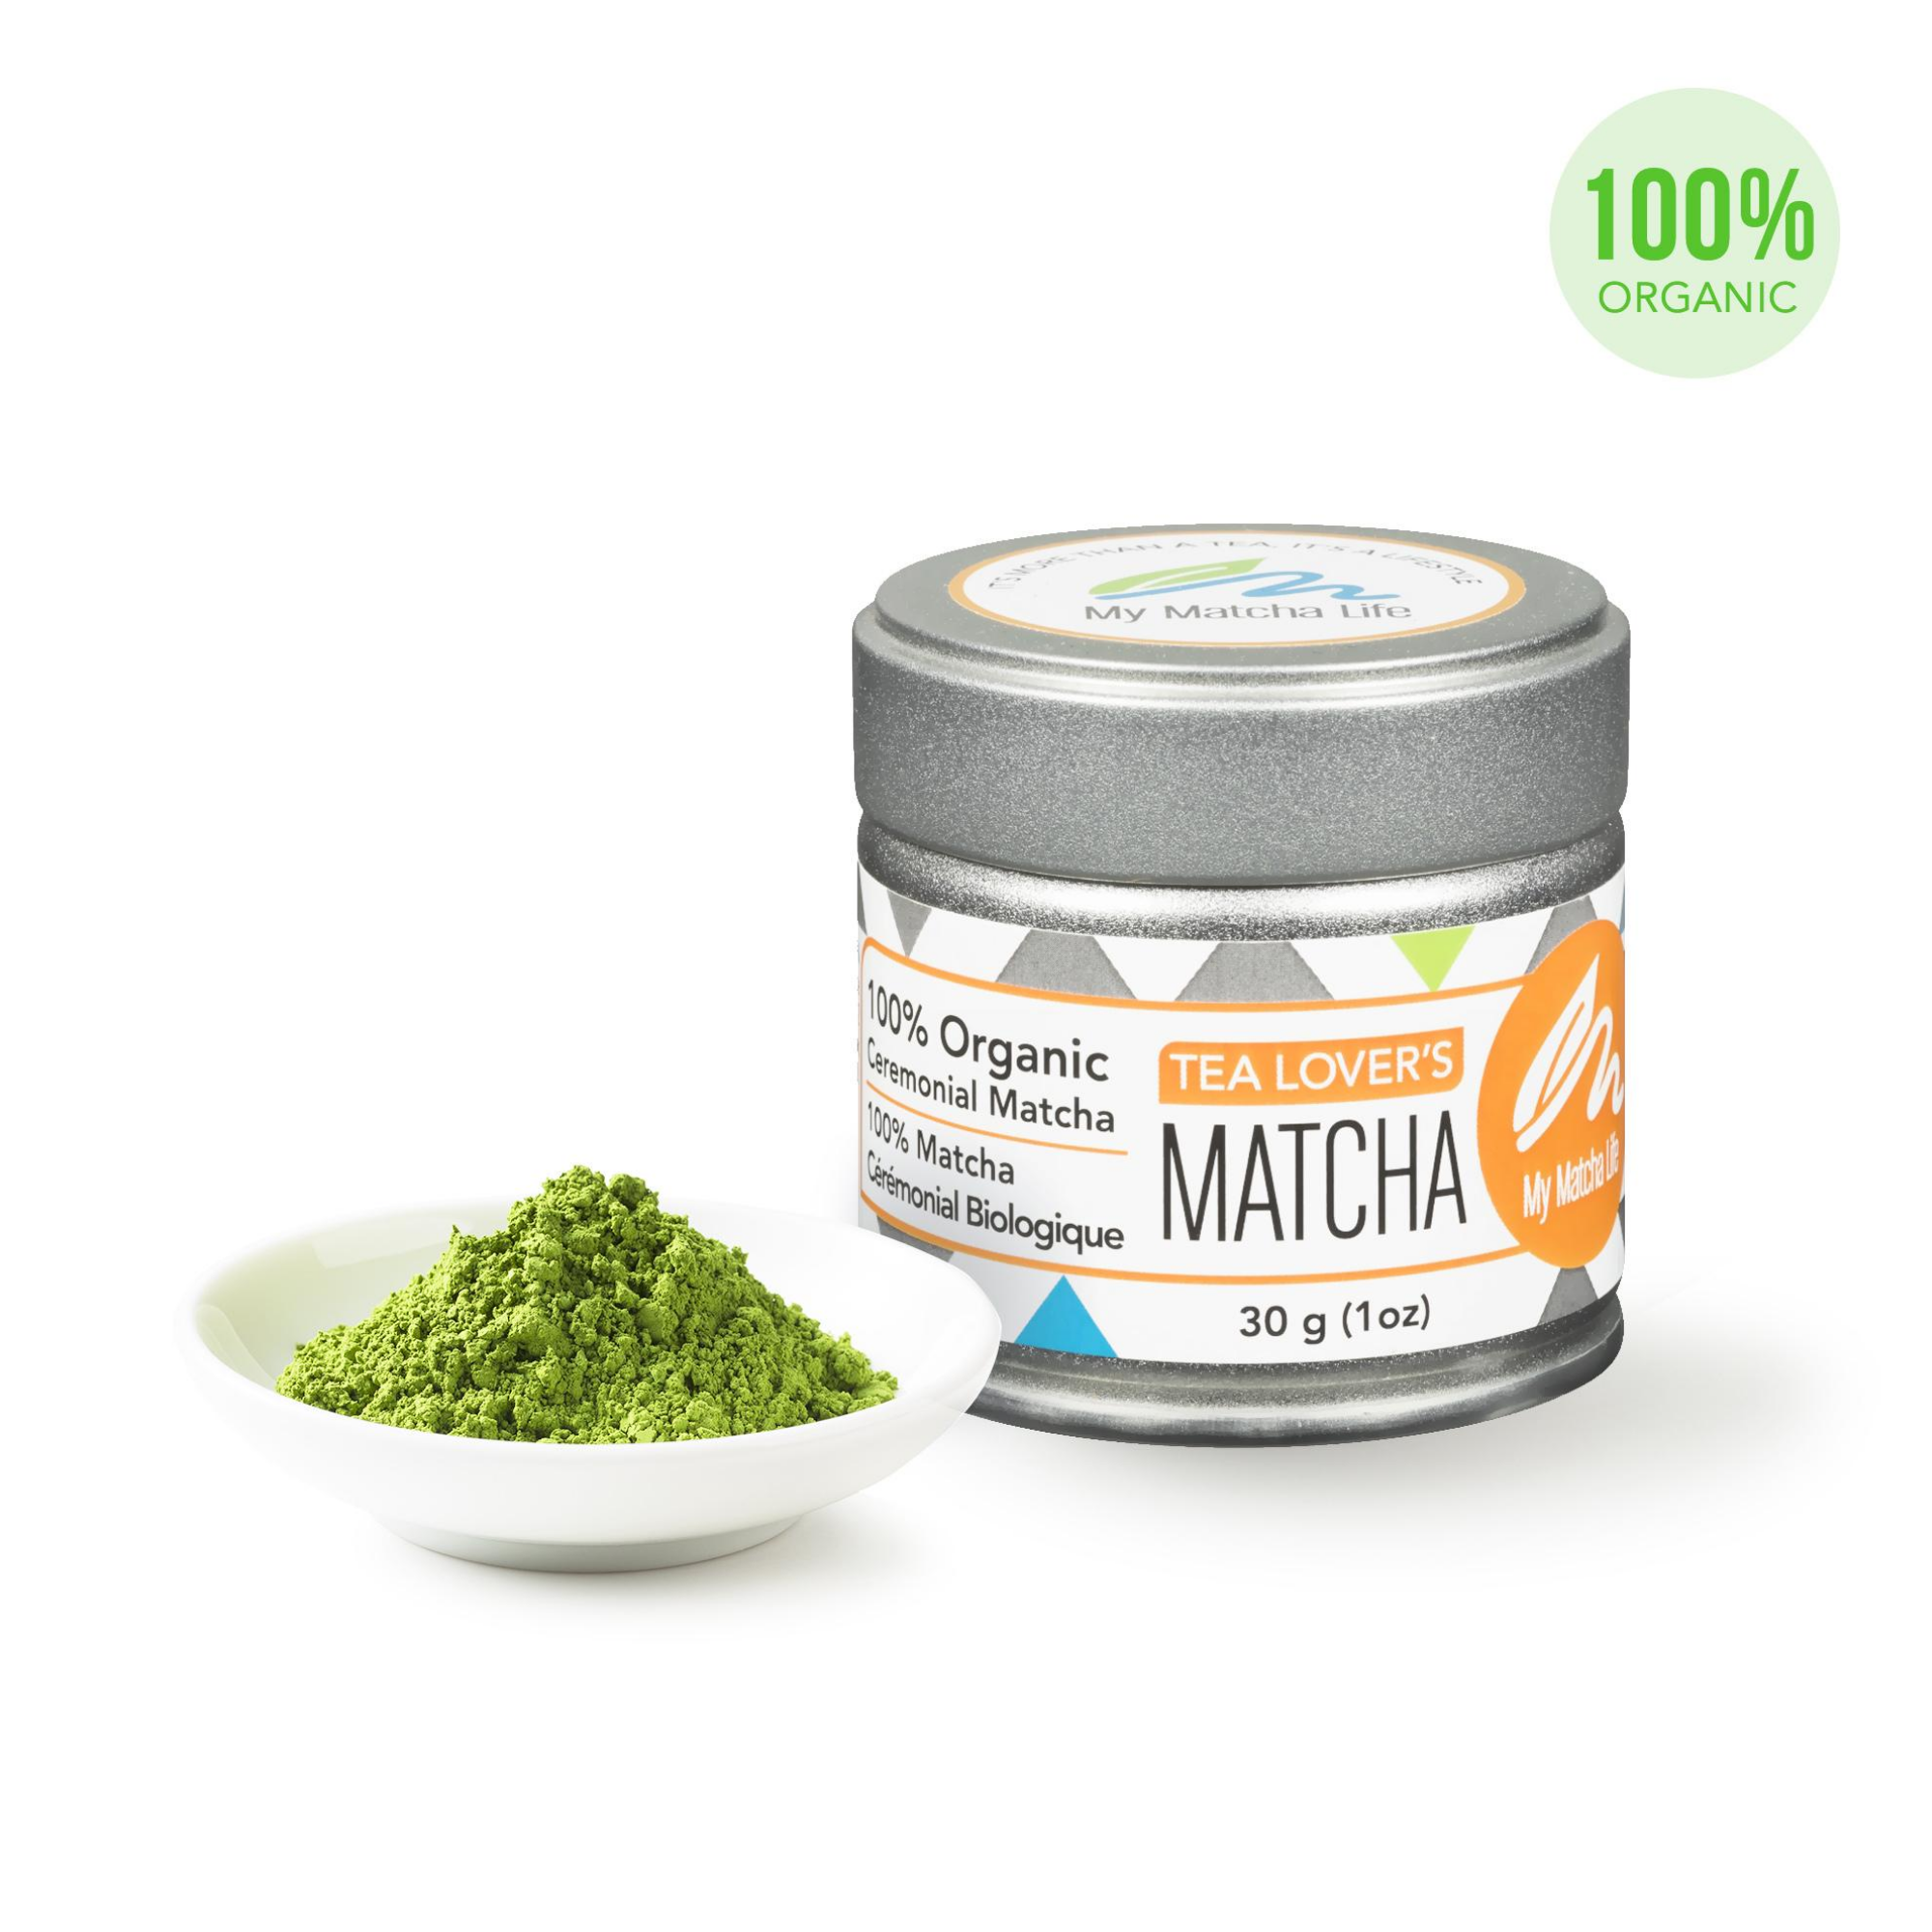 Matcha Powder - Ceremonial Organic